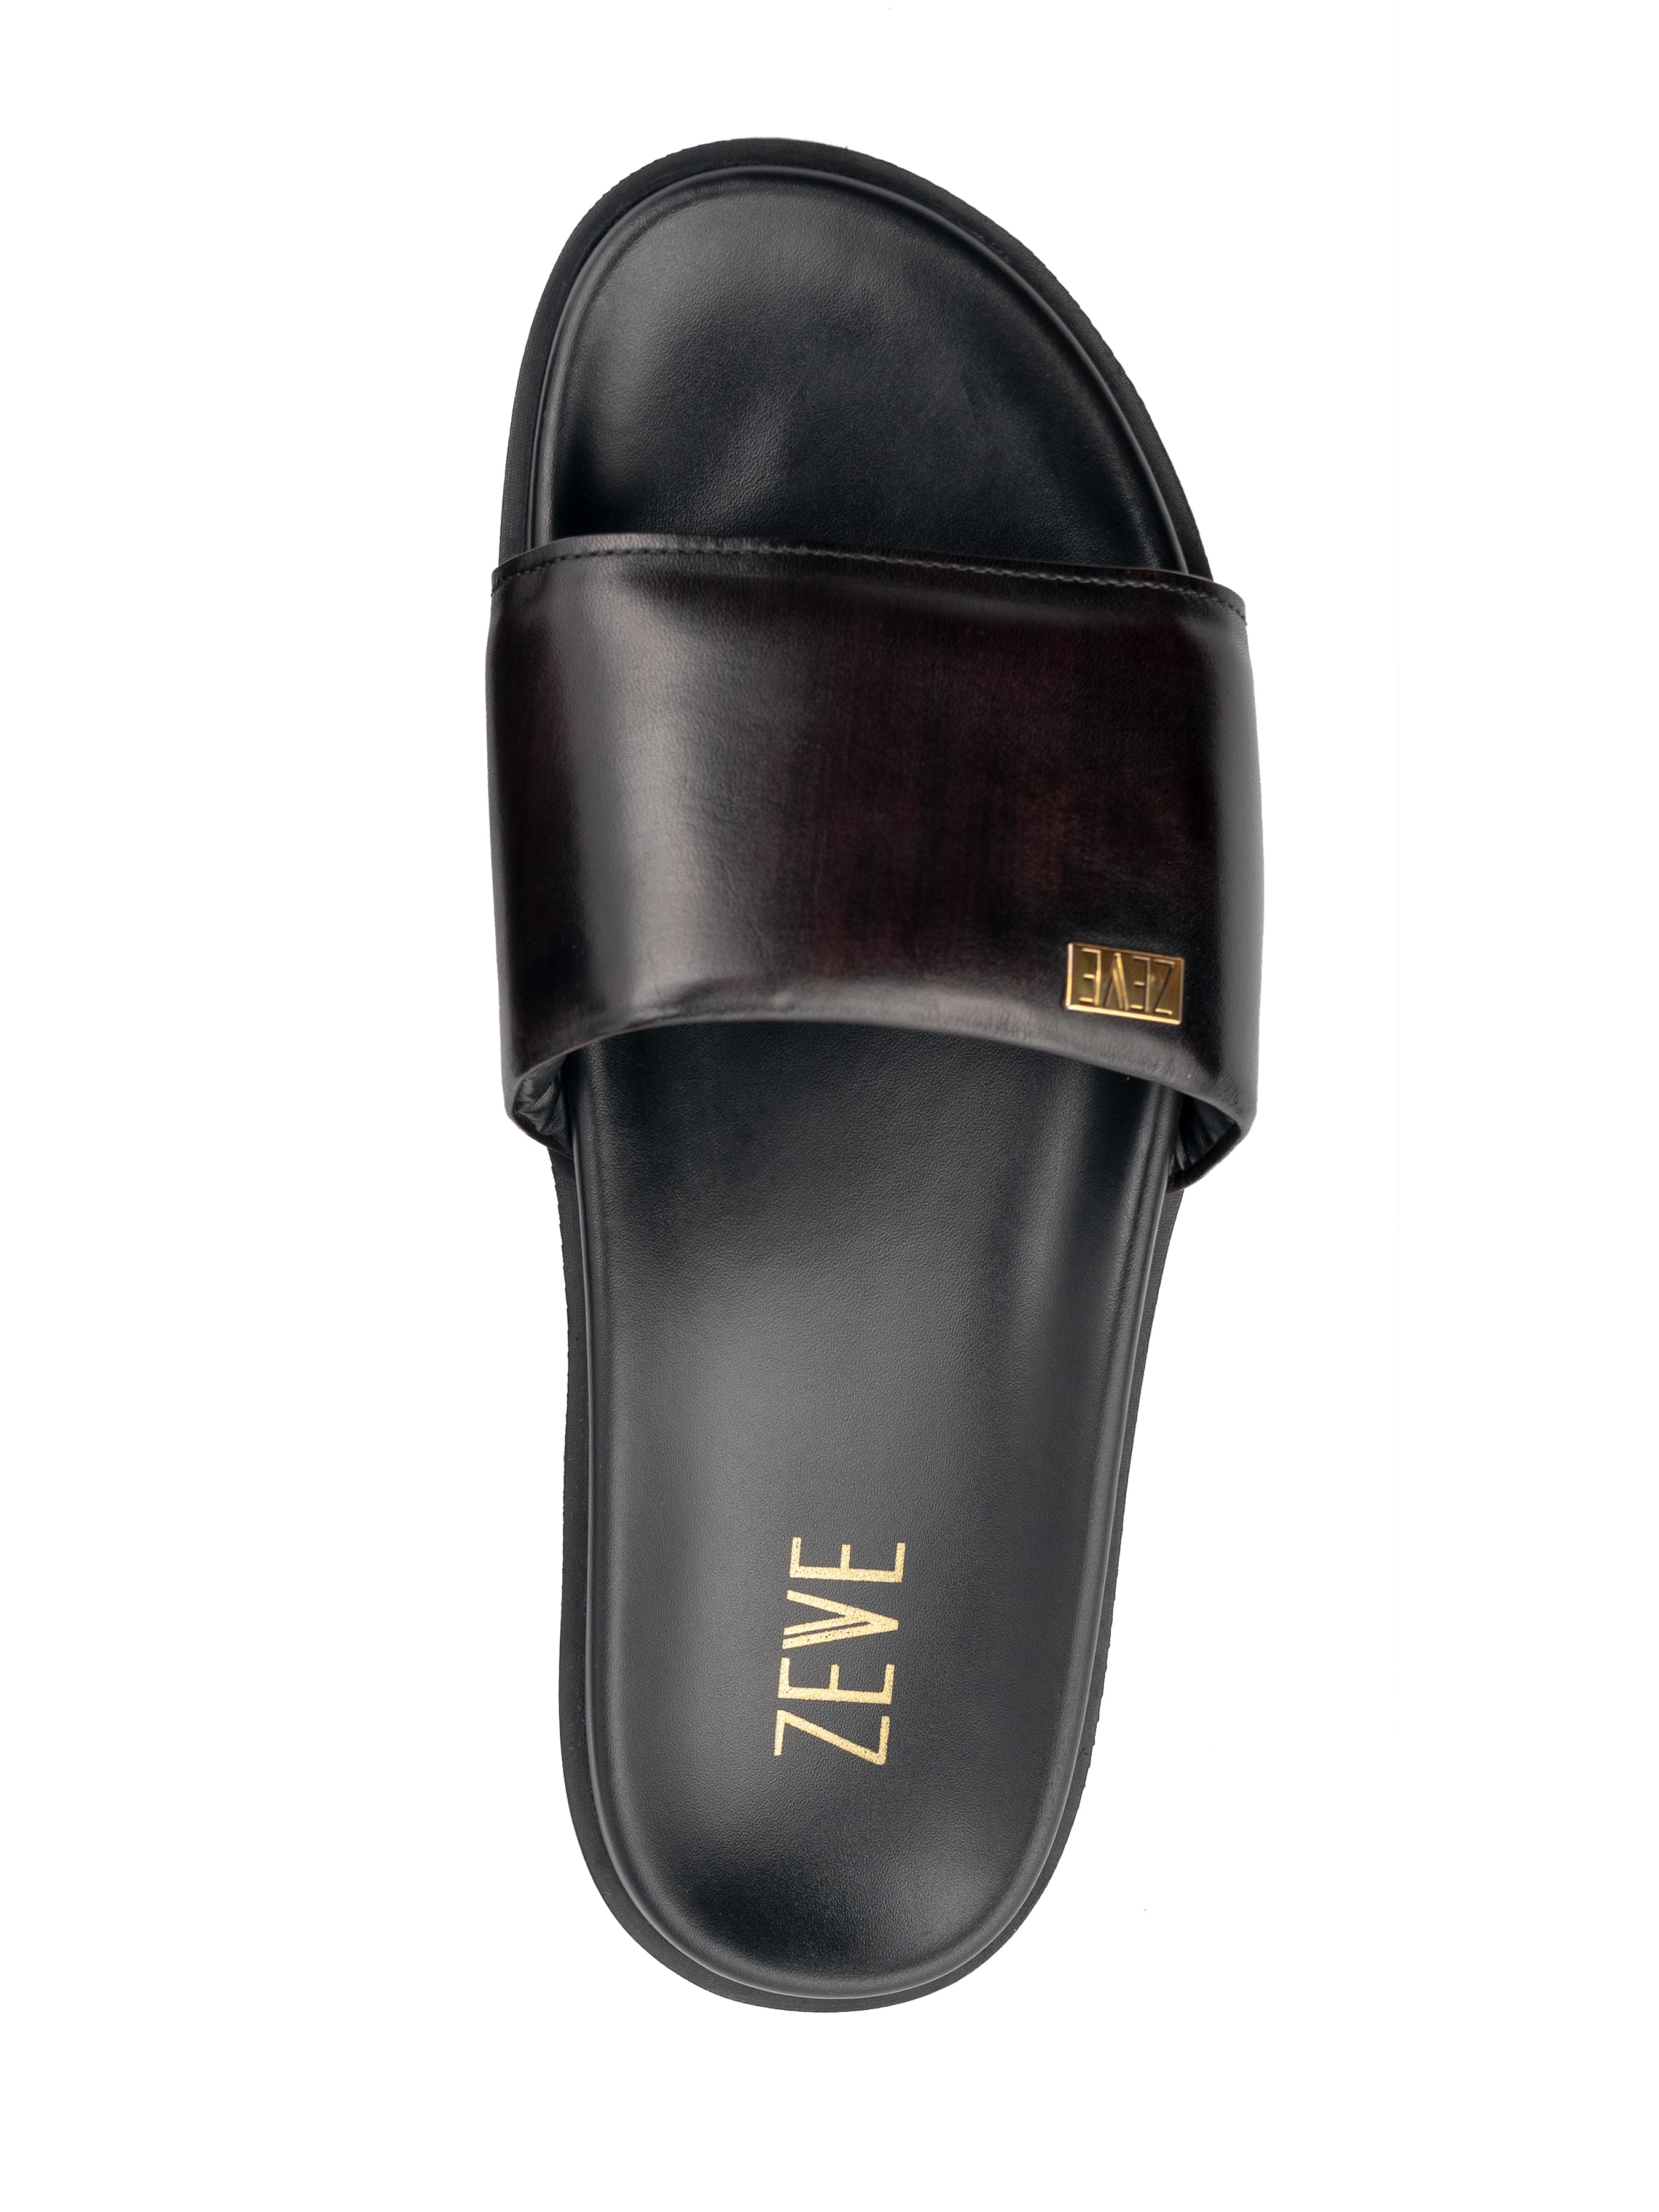 Slide Sandal - Coffee Patina Leather